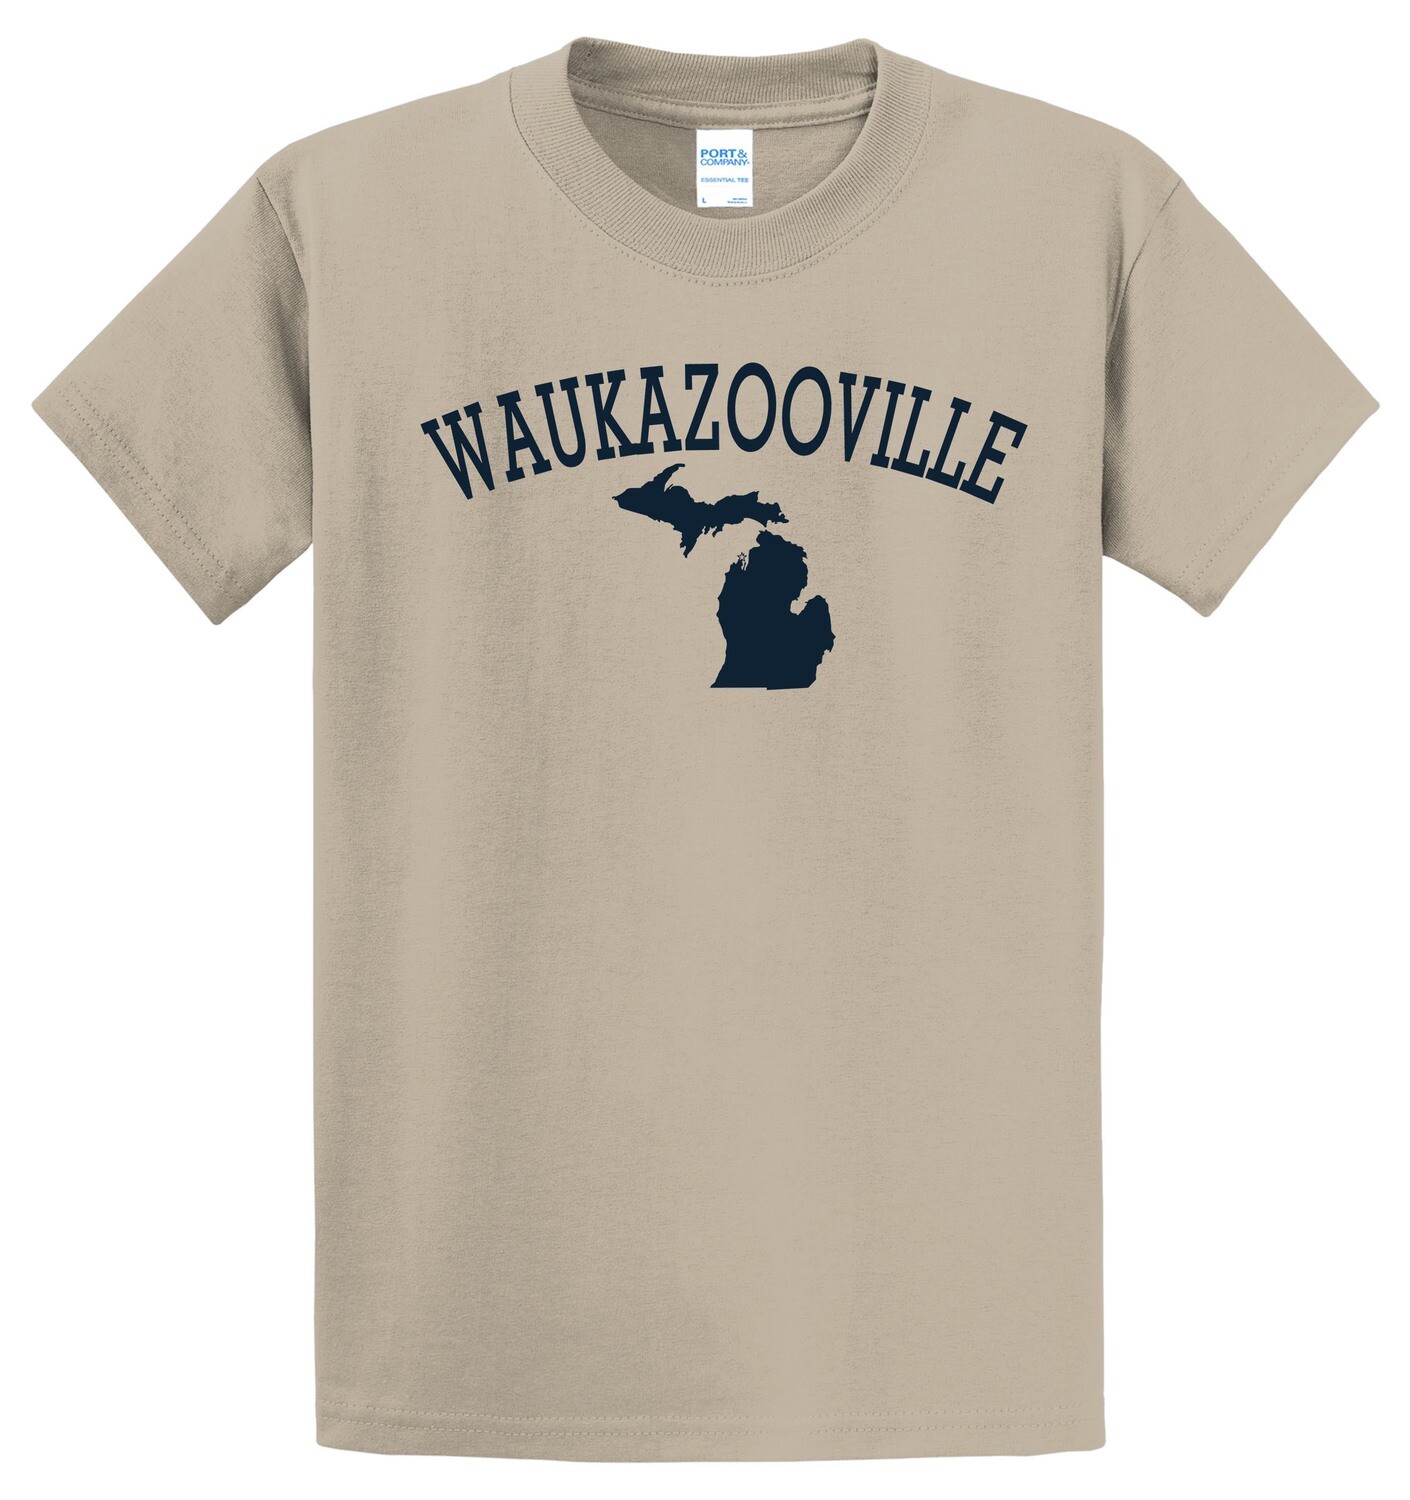 Waukazooville T-Shirt